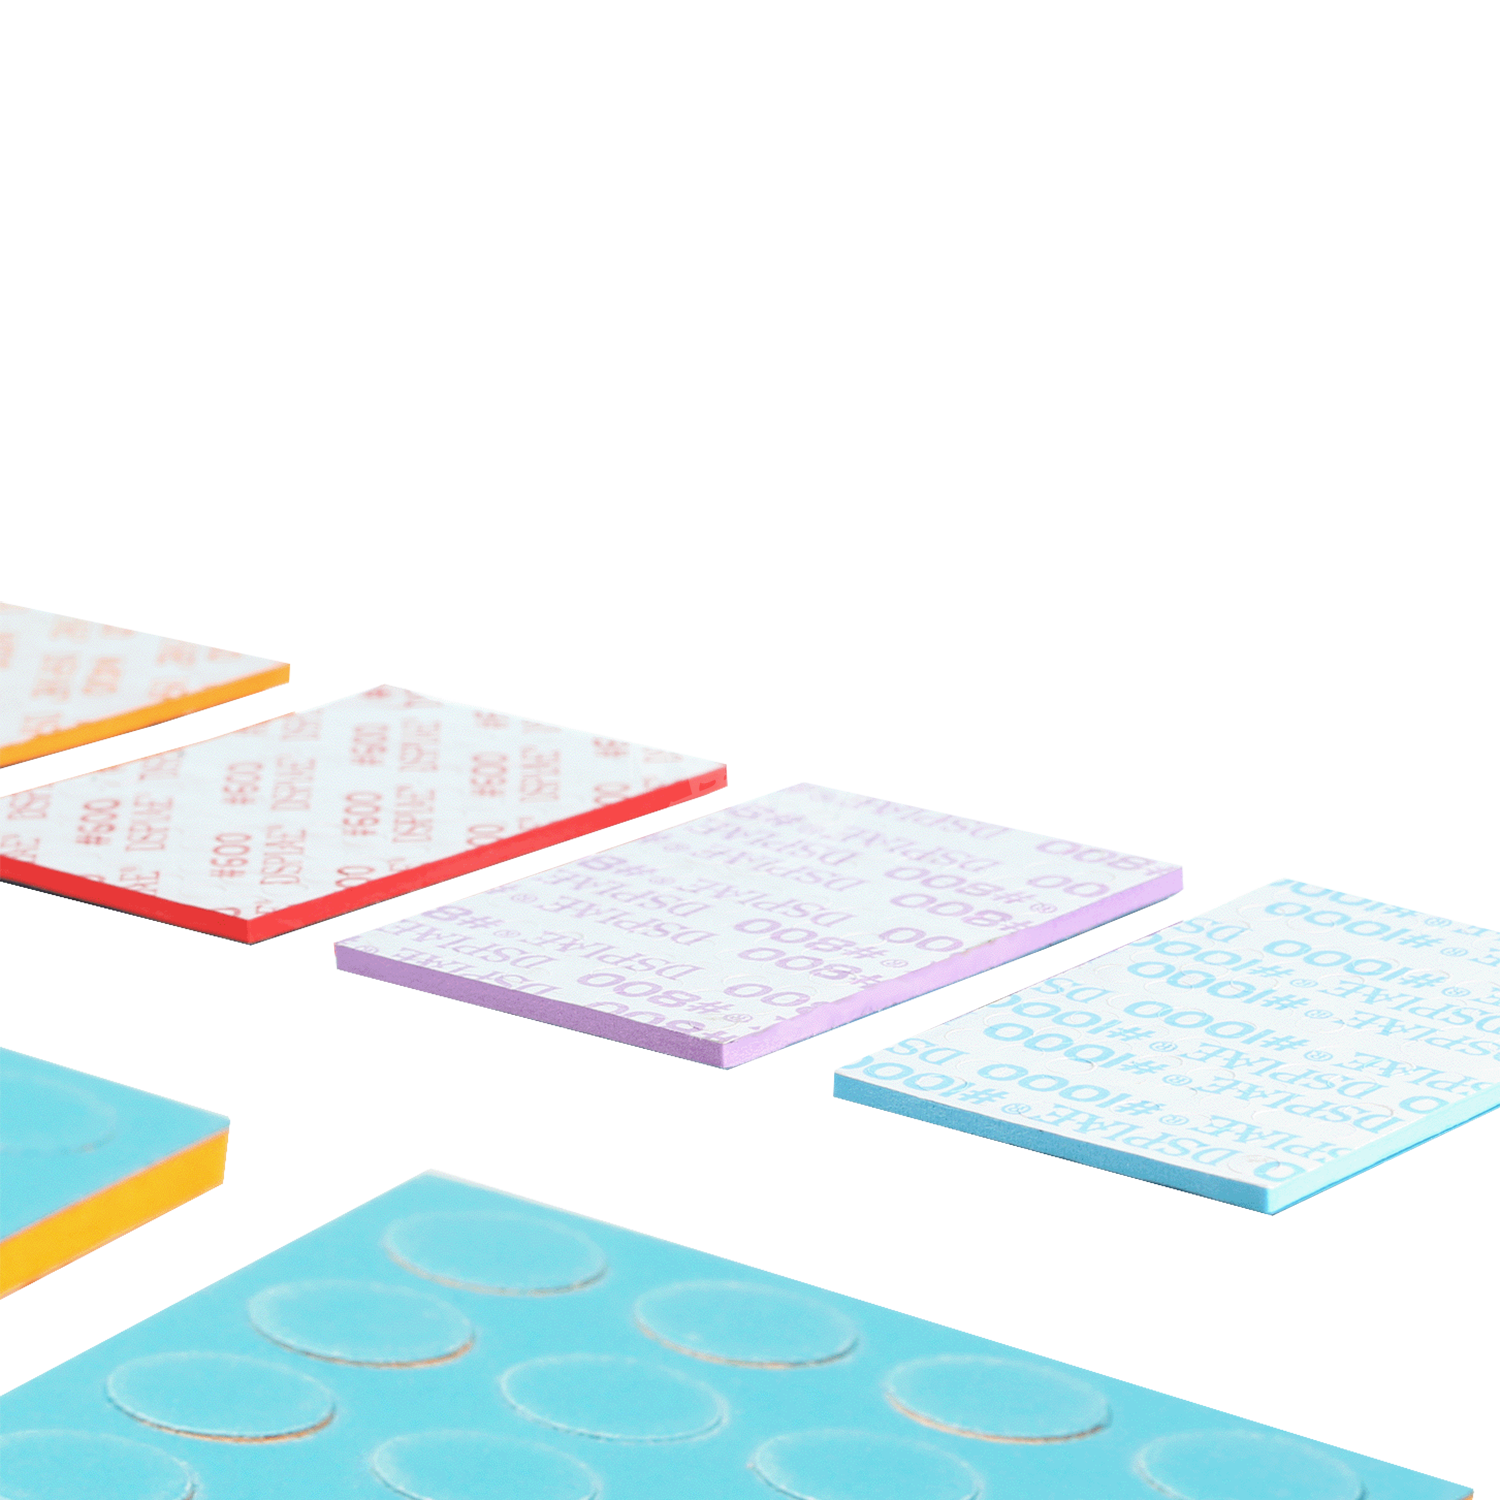 DSPIAE - Sponge Sanding Discs [Large] [#400] - ShokuninGunpla